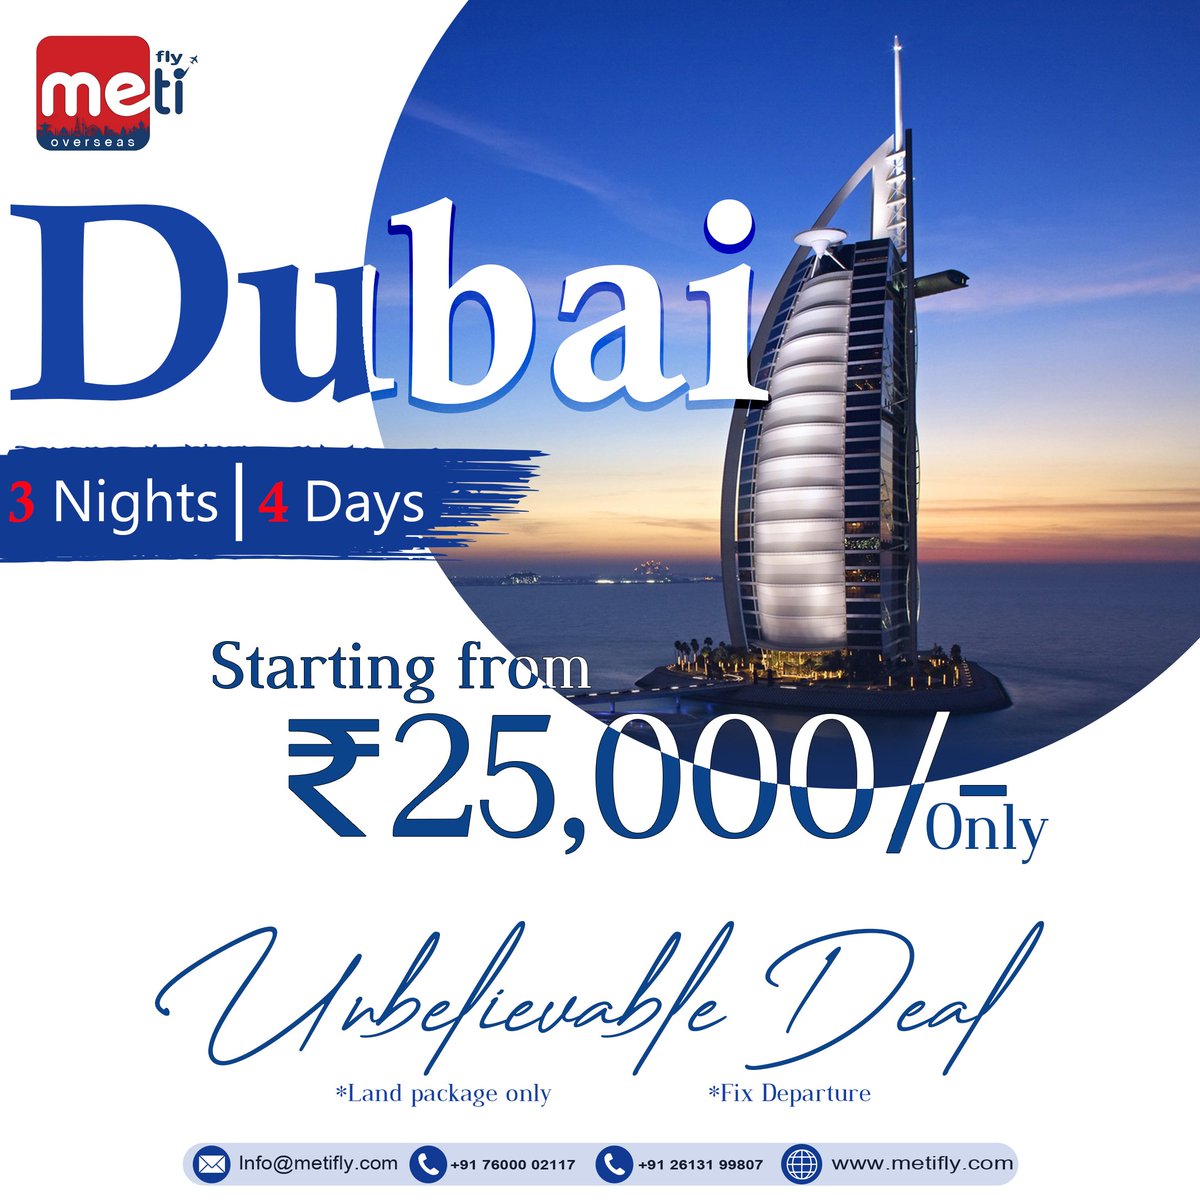 Unbelievable Deal! 3 Nights-4Days in Dubai, starting at ₹25,000/- with Metifly.

Call Us to Explore
+91 76000 02117. 
.
Follow Us...

_Facebook_

facebook.com/Metiflyy?mibex…

_Instagram_

instagram.com/metiflyy?igshi…
.
.
#unbelievabledeal #deal #palnyourtrip #dubai #dubaitourism #metifly